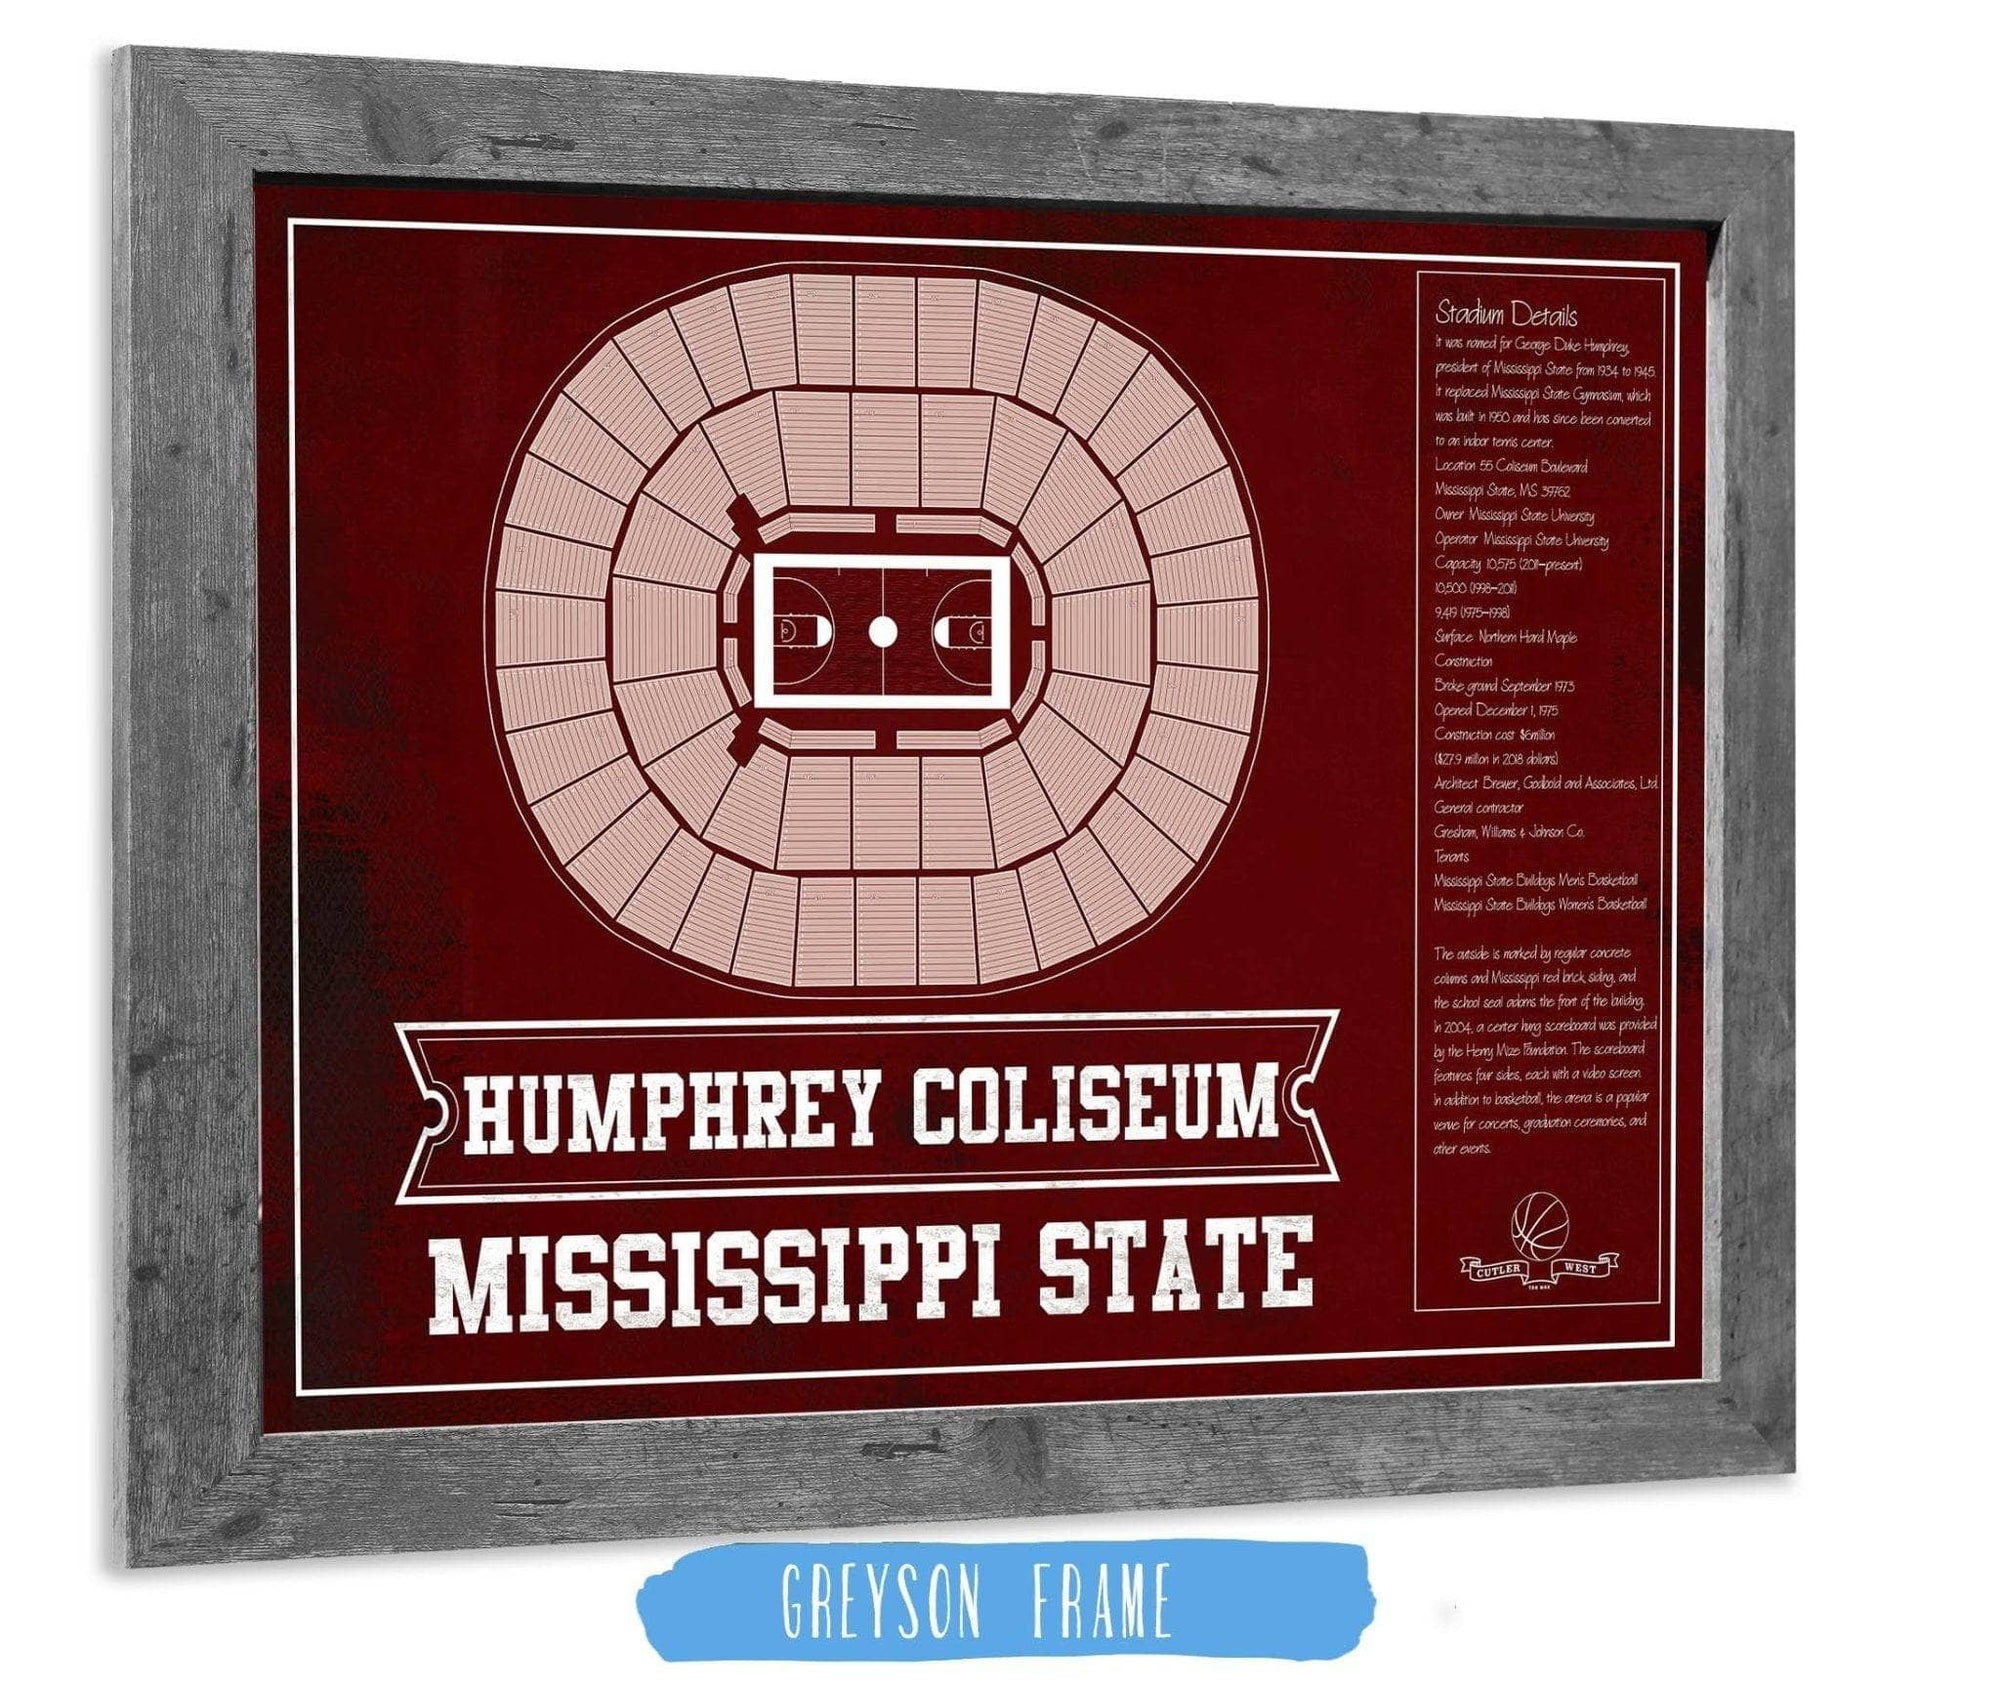 Cutler West Basketball Collection 14" x 11" / Greyson Frame Humphrey Coliseum - Mississippi State Bulldogs NCAA College Basketball Blueprint Art 93335022384357